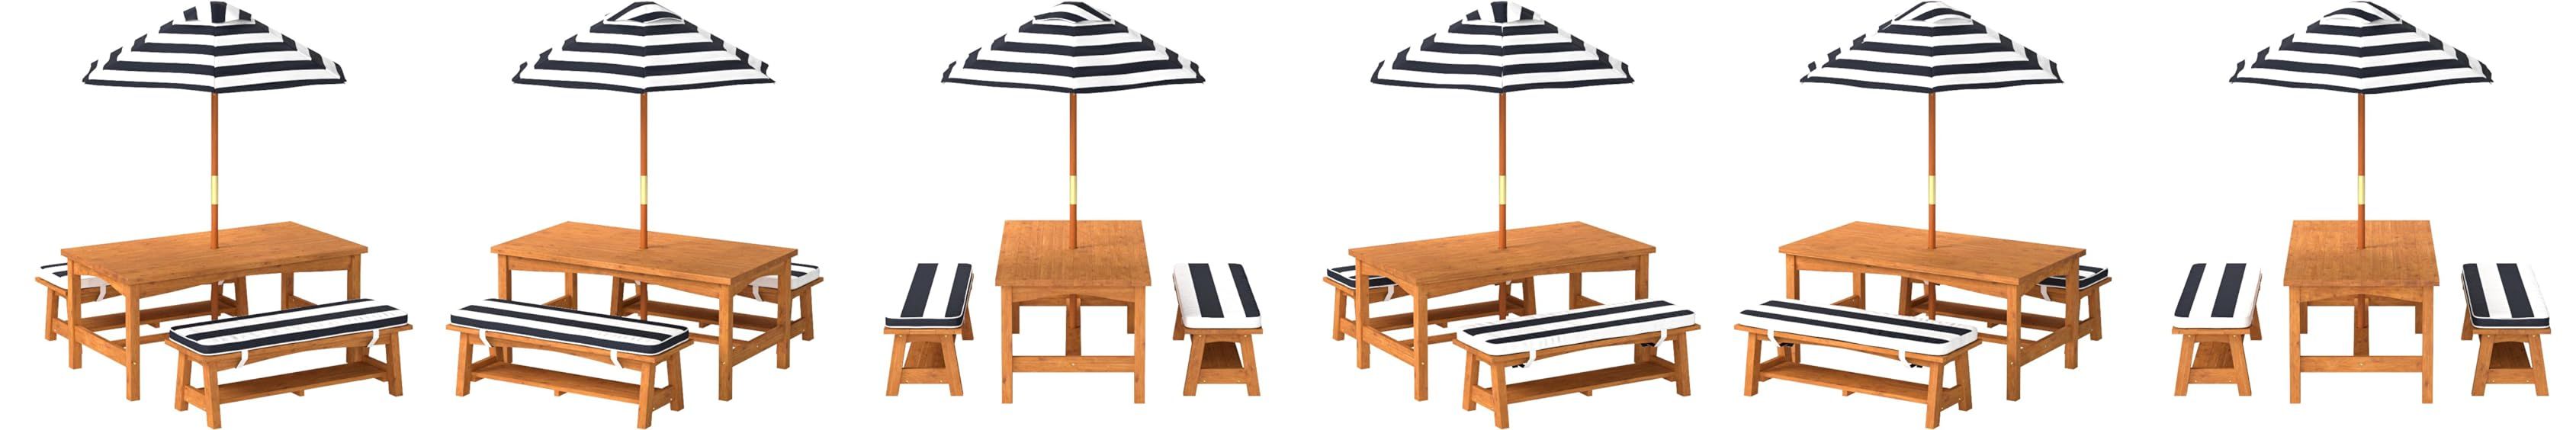 KidKraft Outdoor Wooden Table & Bench Set with Cushions and Umbrella, Kids Backyard Furniture, Na... | Amazon (US)